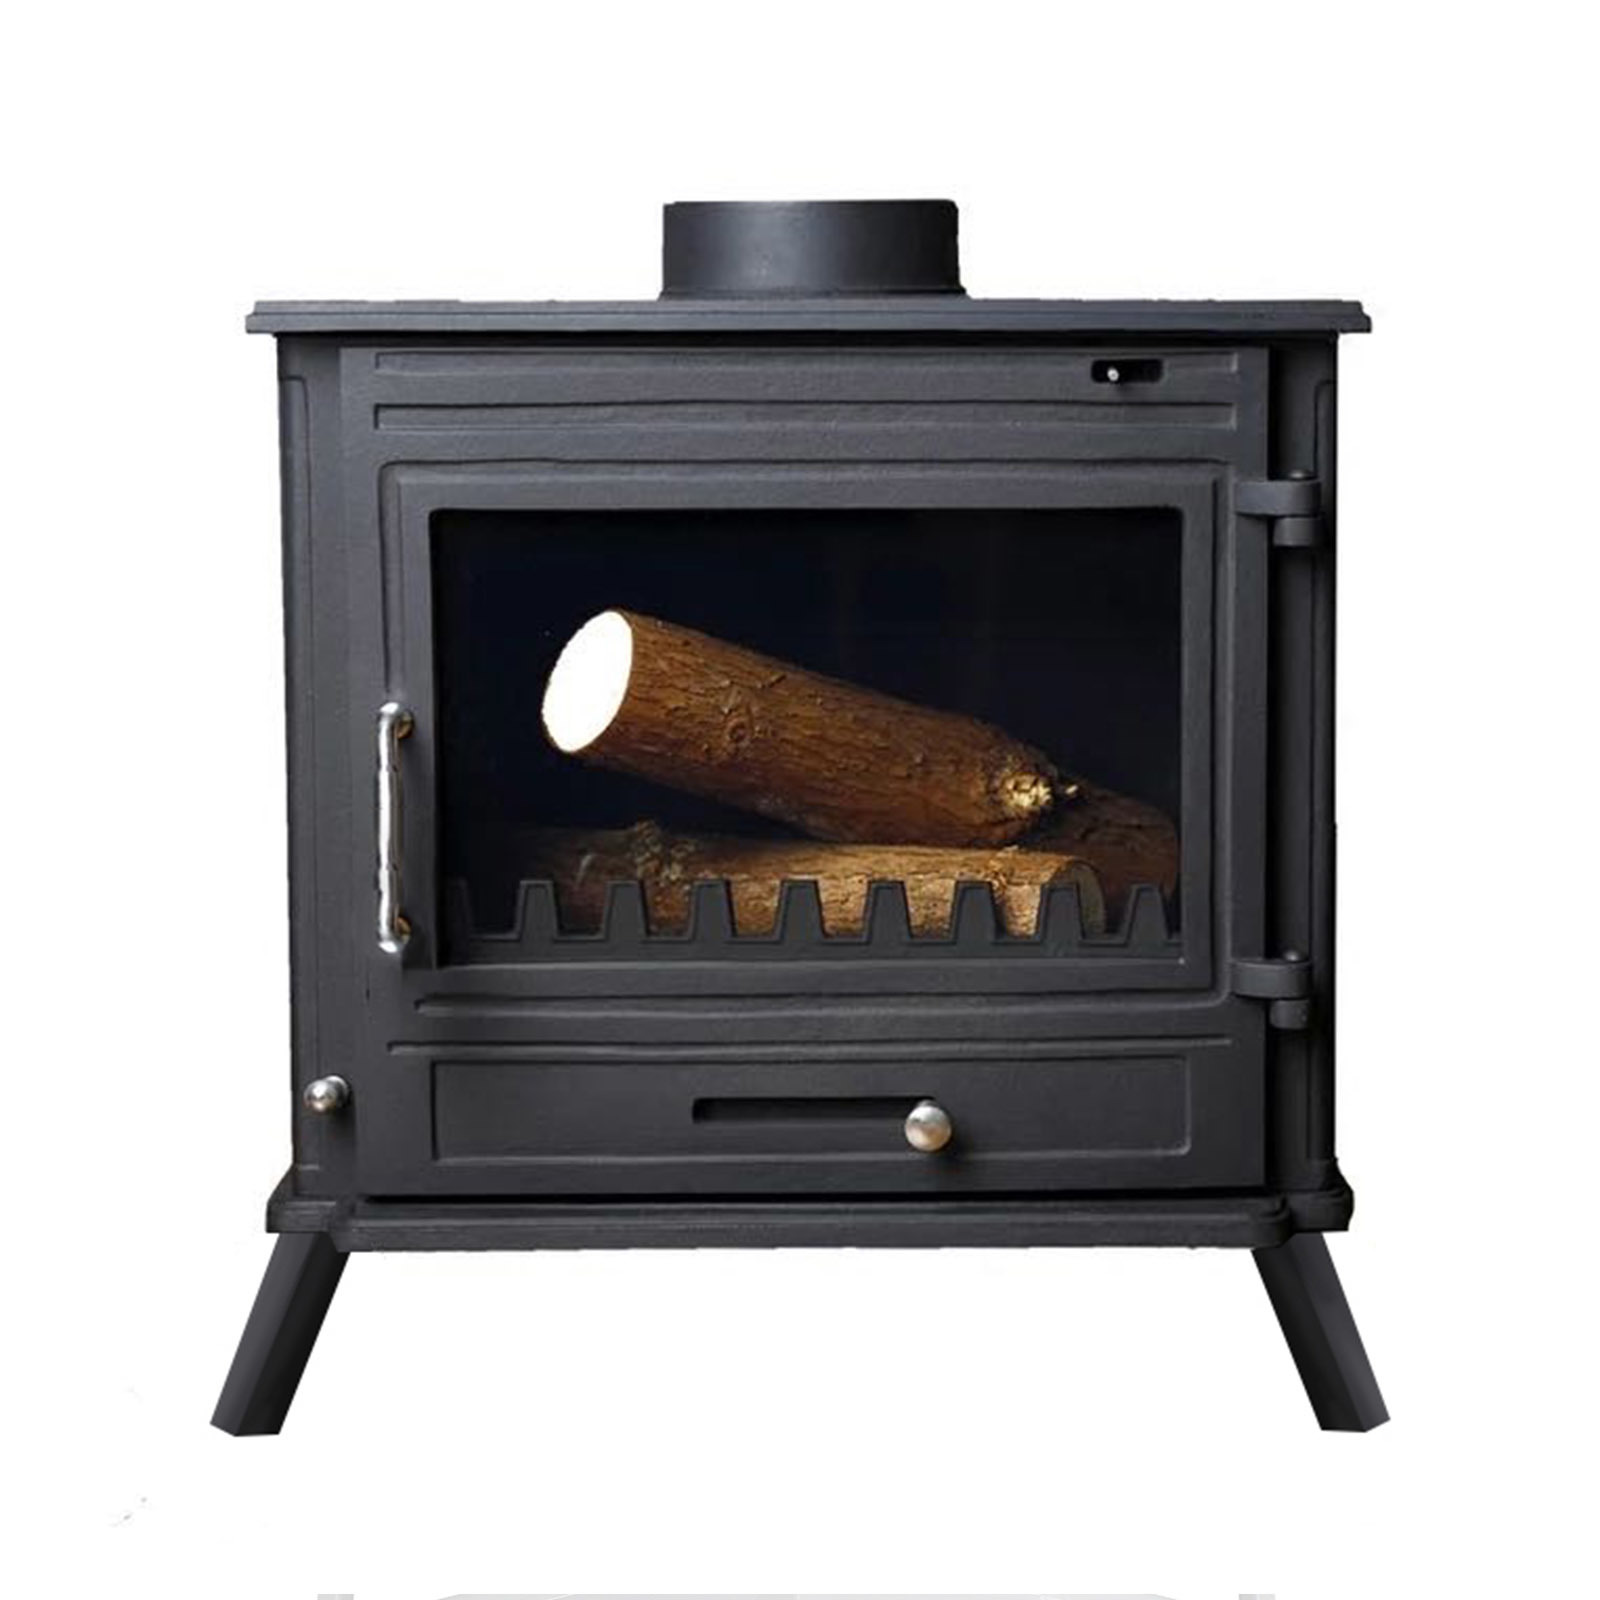 Wood heating furnace